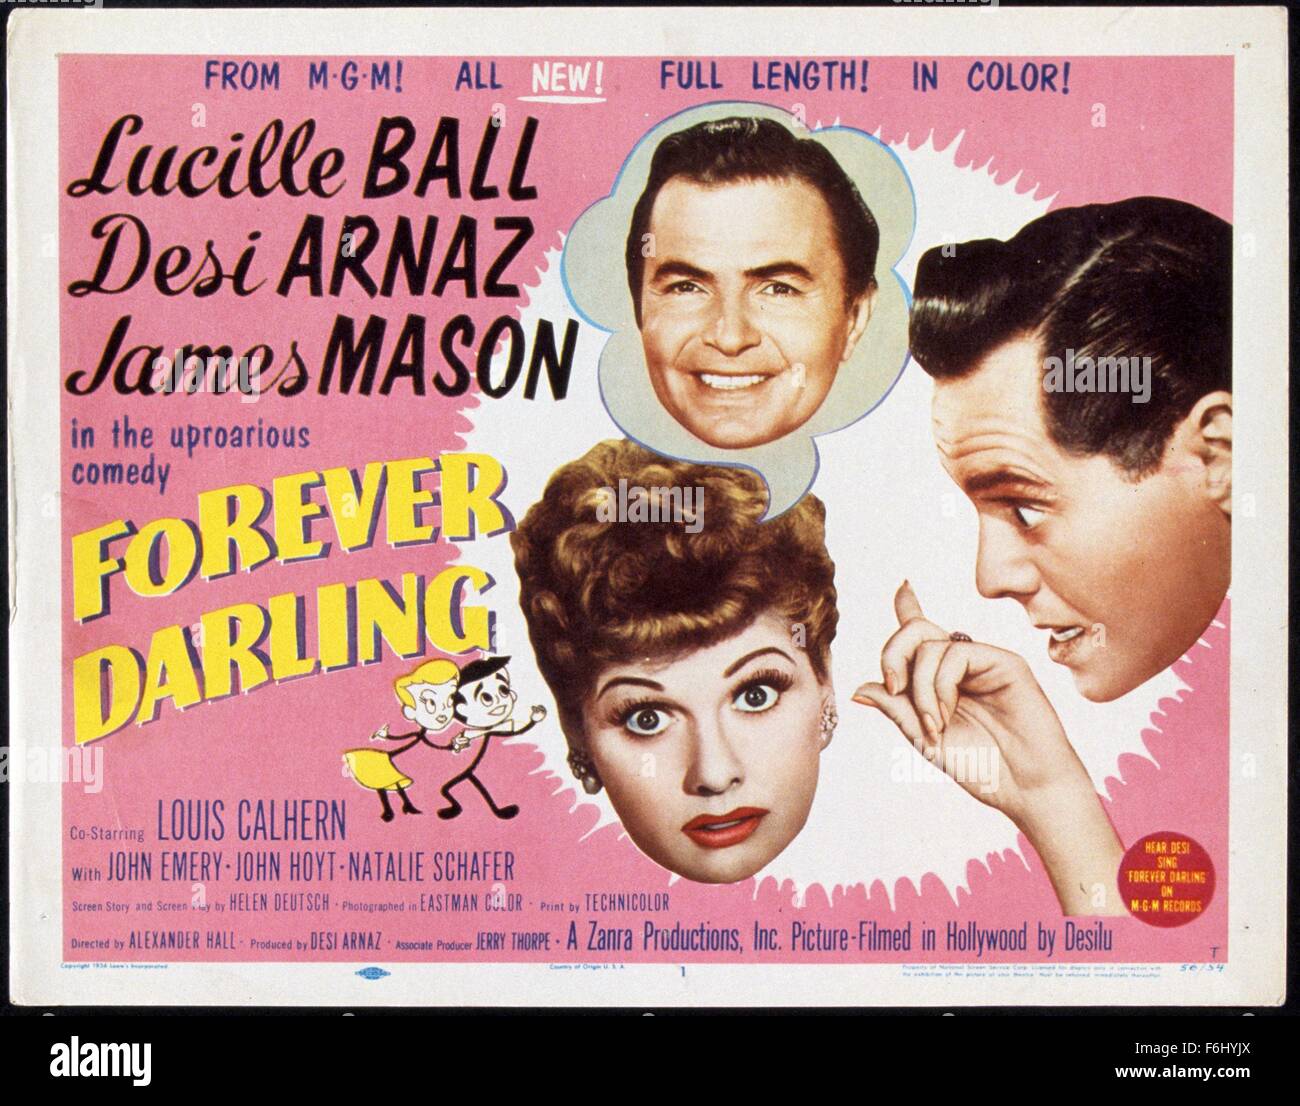 1956, Film Title: FOREVER DARLING, Director: ALEXANDER HALL, Studio: MGM, Pictured: DESI ARNAZ, LUCILLE BALL, ALEXANDER HALL. (Credit Image: SNAP) Stock Photo